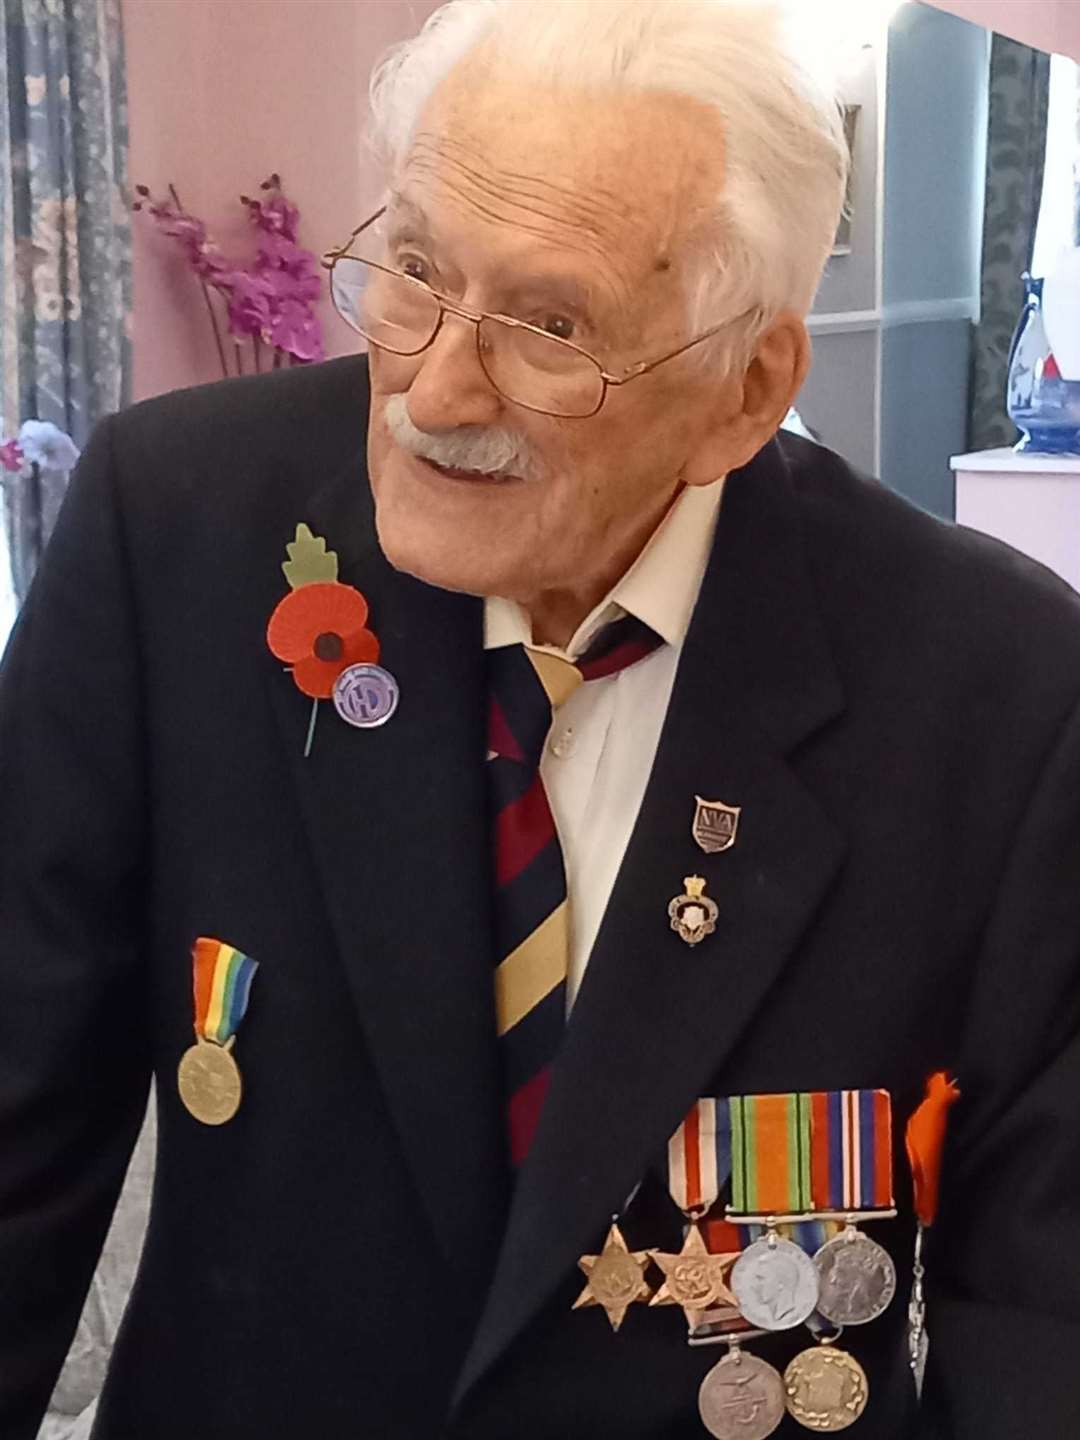 John Stokes when he received the Legion d'honneur